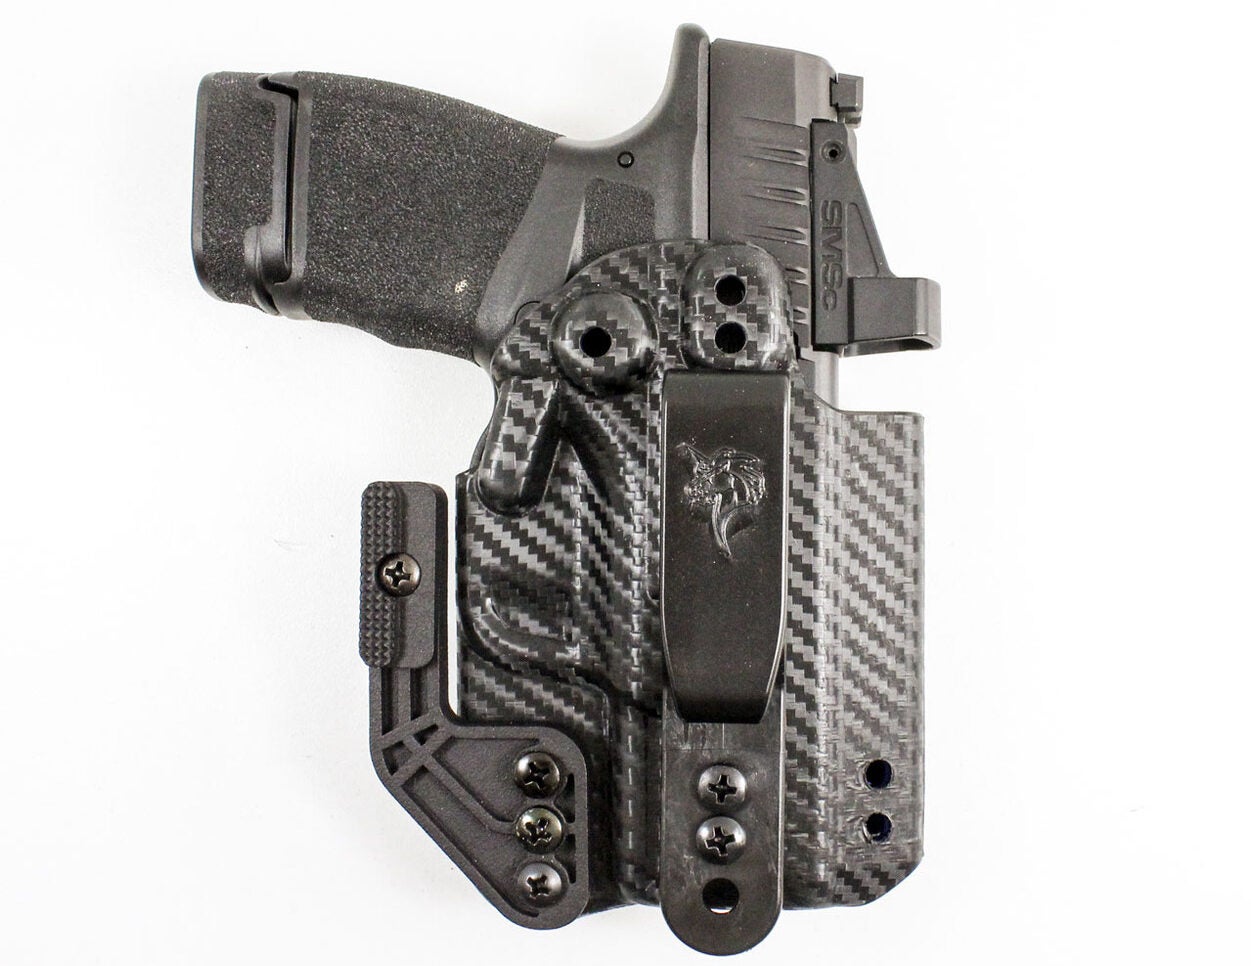 DeSantis Releases the Persuader IWB Holster for Glock Pistols